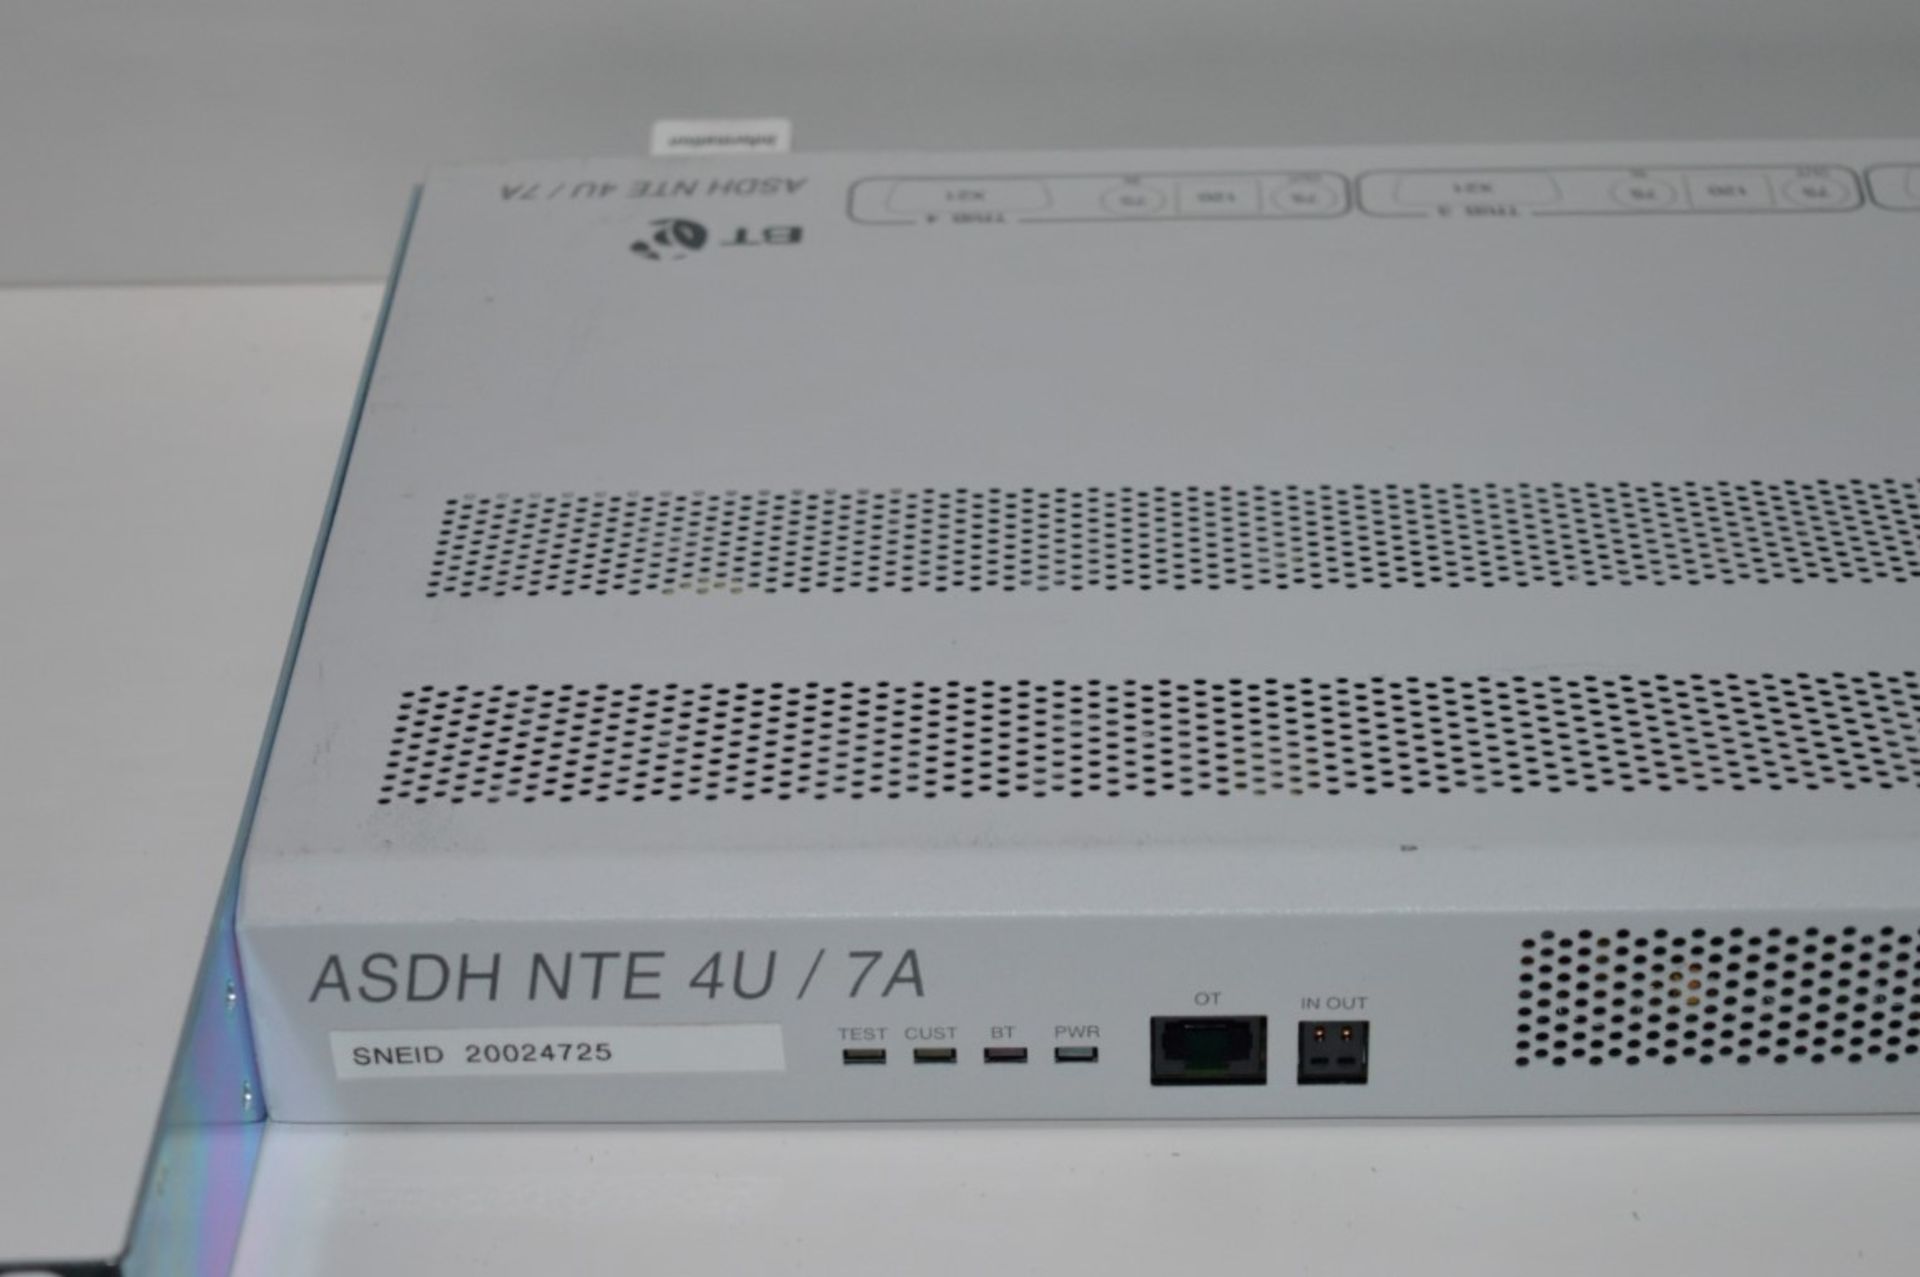 1 x BT ASDH NTE 4U/7A Access SDH Network Terminating Unit - CL300 - Ref PC022 - Location: Altrincham - Image 4 of 8